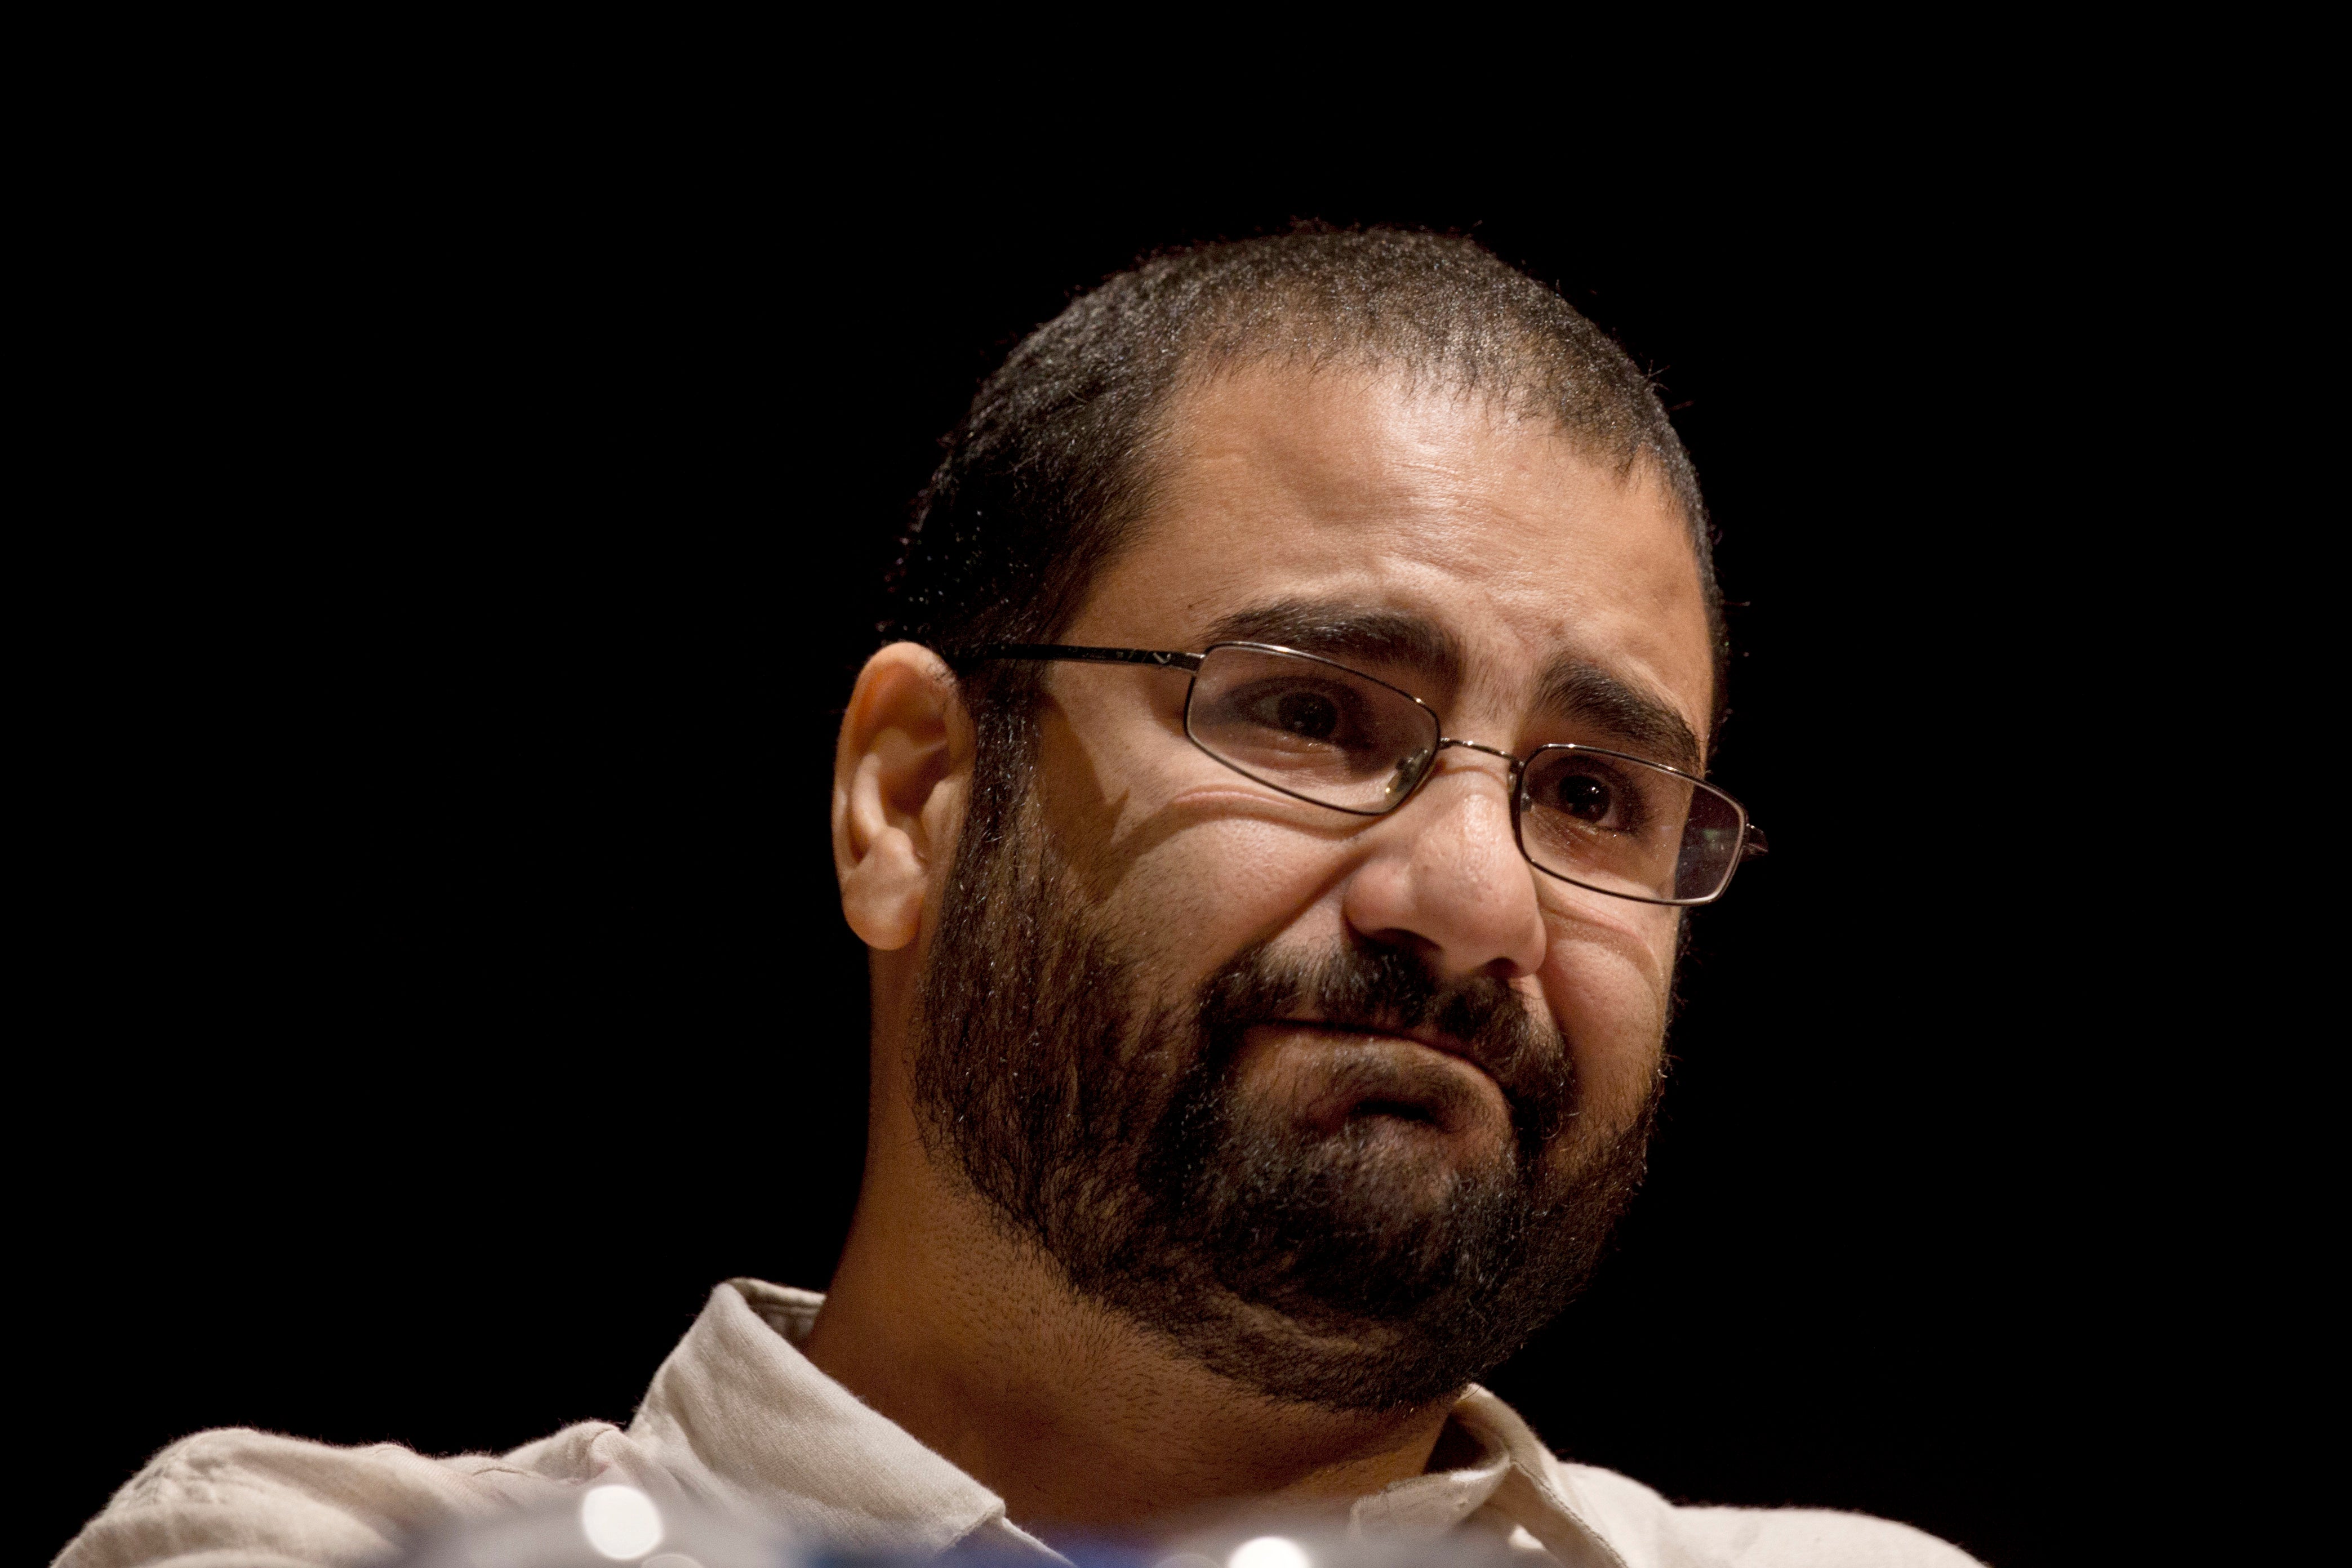 Alaa Abdel-Fattah is one of Egypt’s highest-profile activists